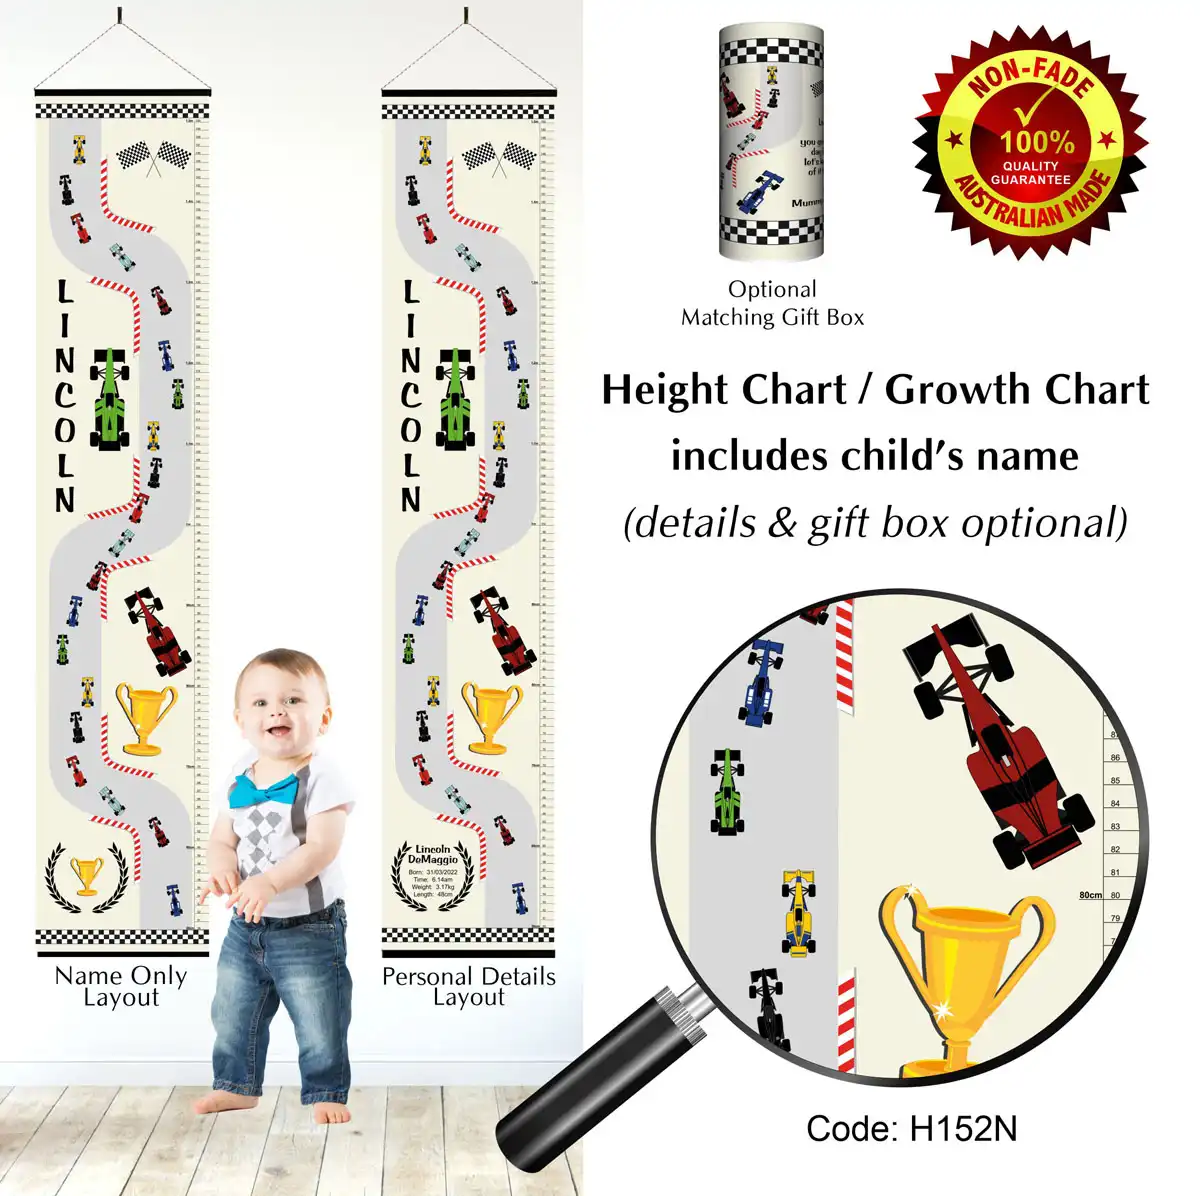 Height Charts - Grand Prix F1 Racing Theme